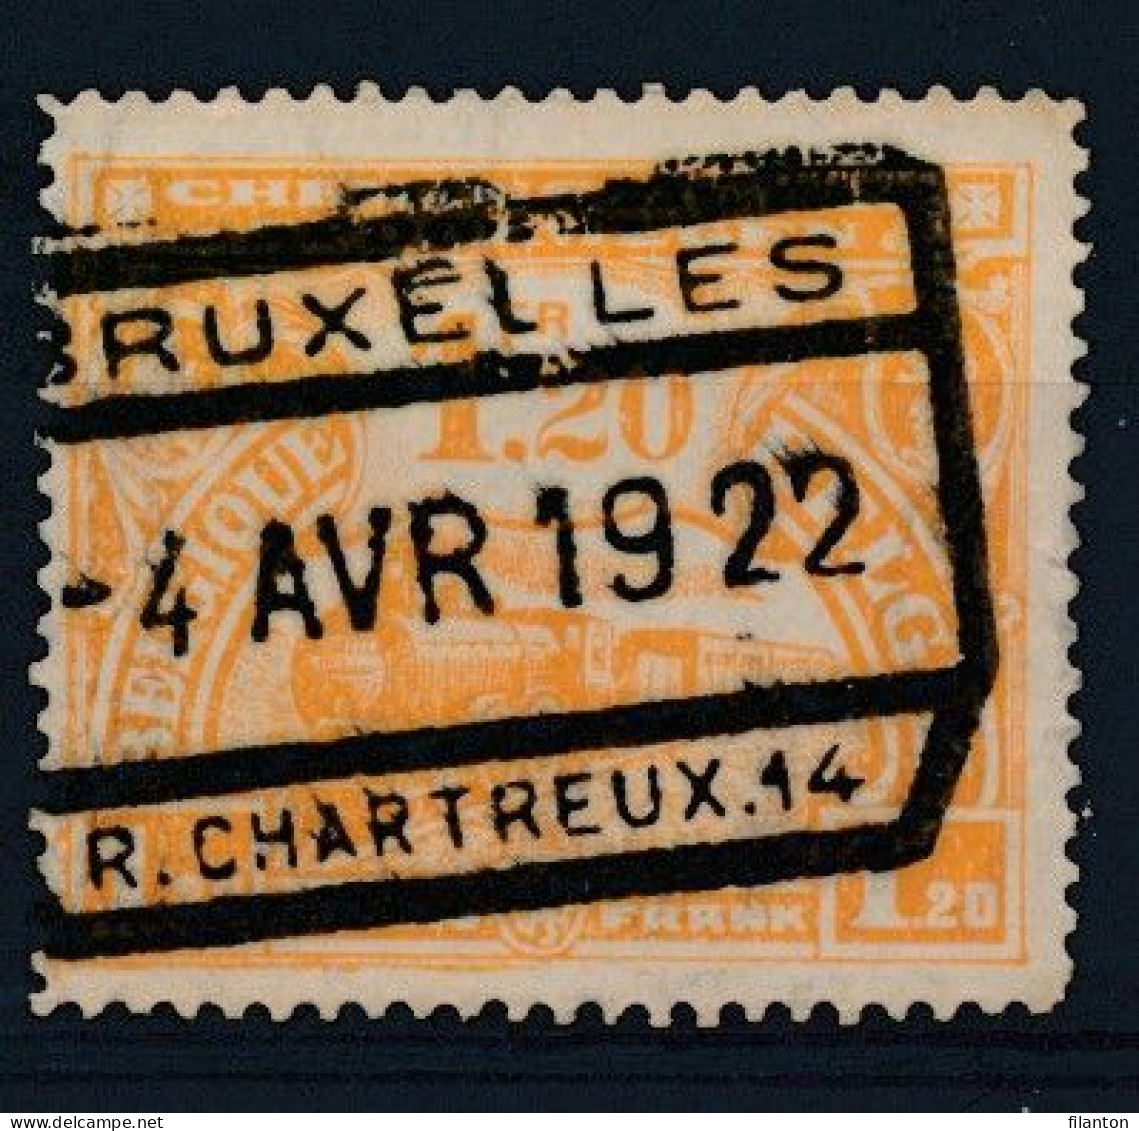 TR  117 -  "BRUXELLES - R.CHARTRTEUX 14" - (ref. 37.493) - Afgestempeld